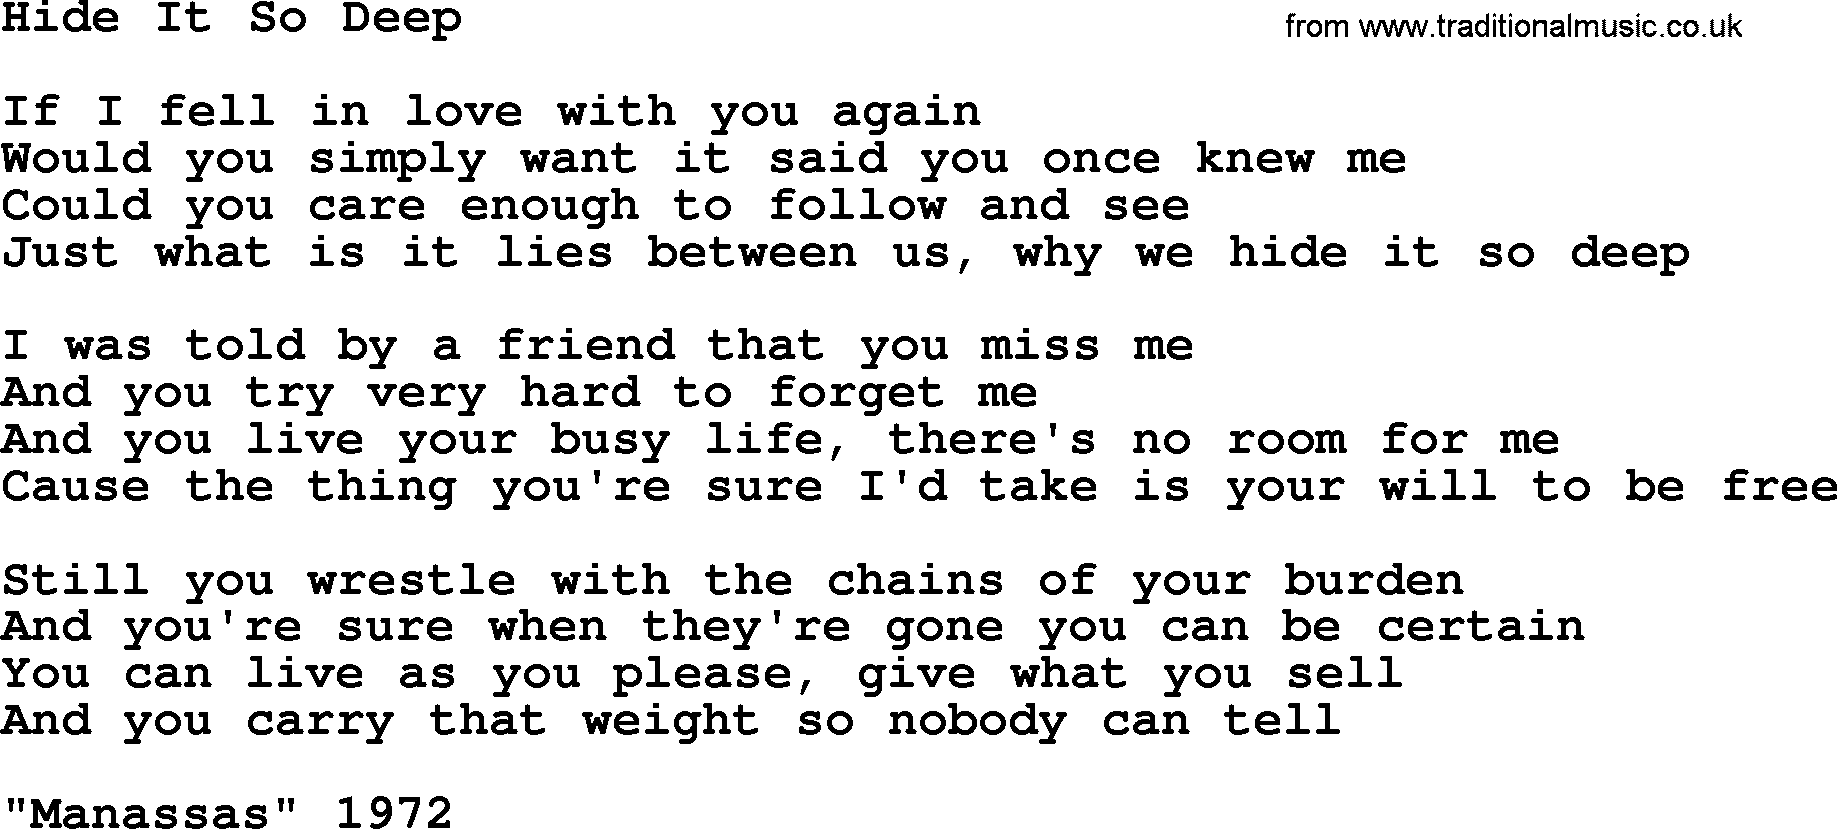 The Byrds song Hide It So Deep, lyrics